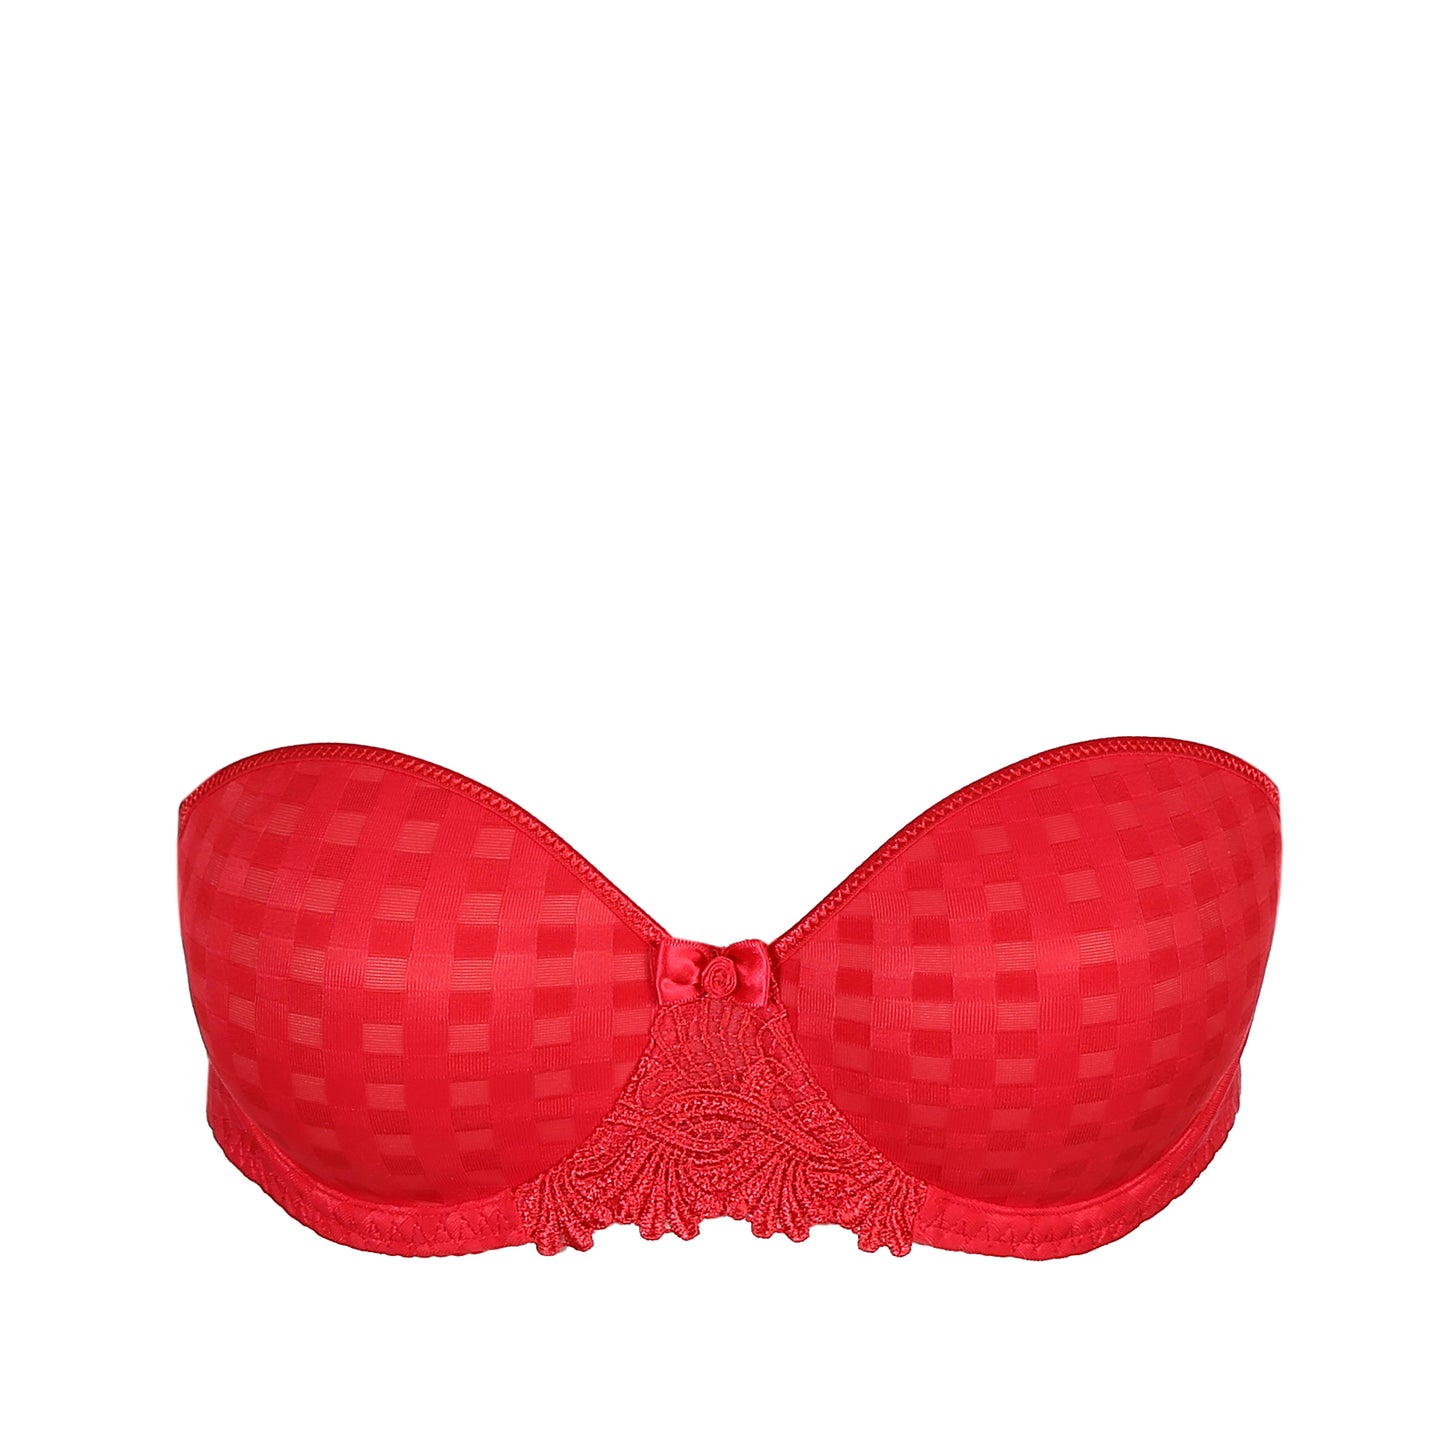 Marie Jo Avero voorgevormde bh - strapless scarlet